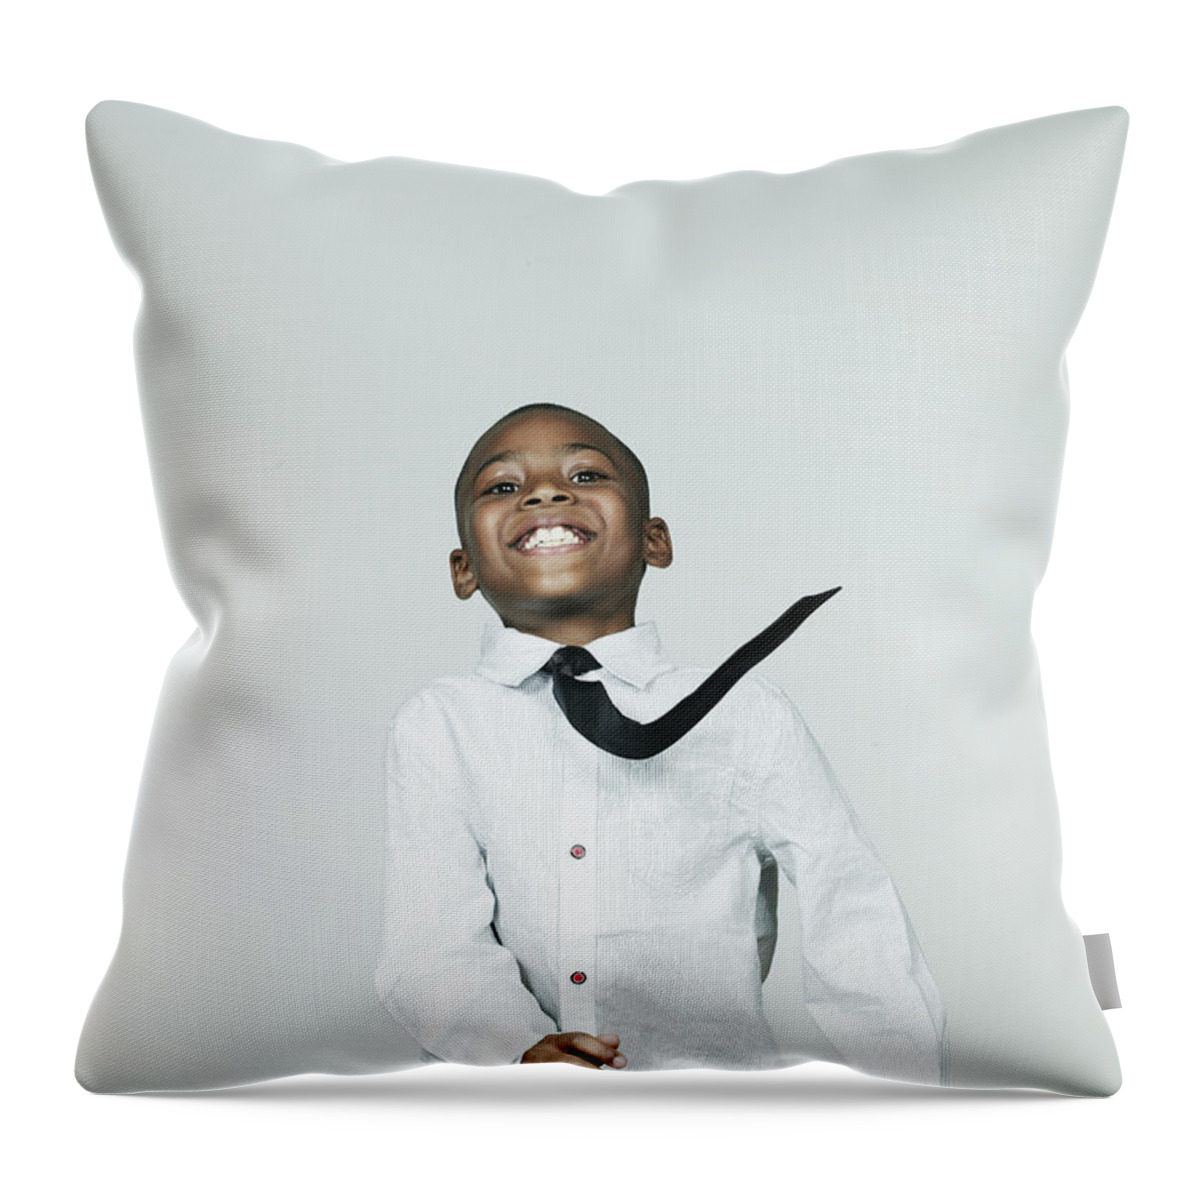 Enjoyment Throw Pillow featuring the photograph Boy 6-7 Dancing, Smiling, Portrait by Flashpop